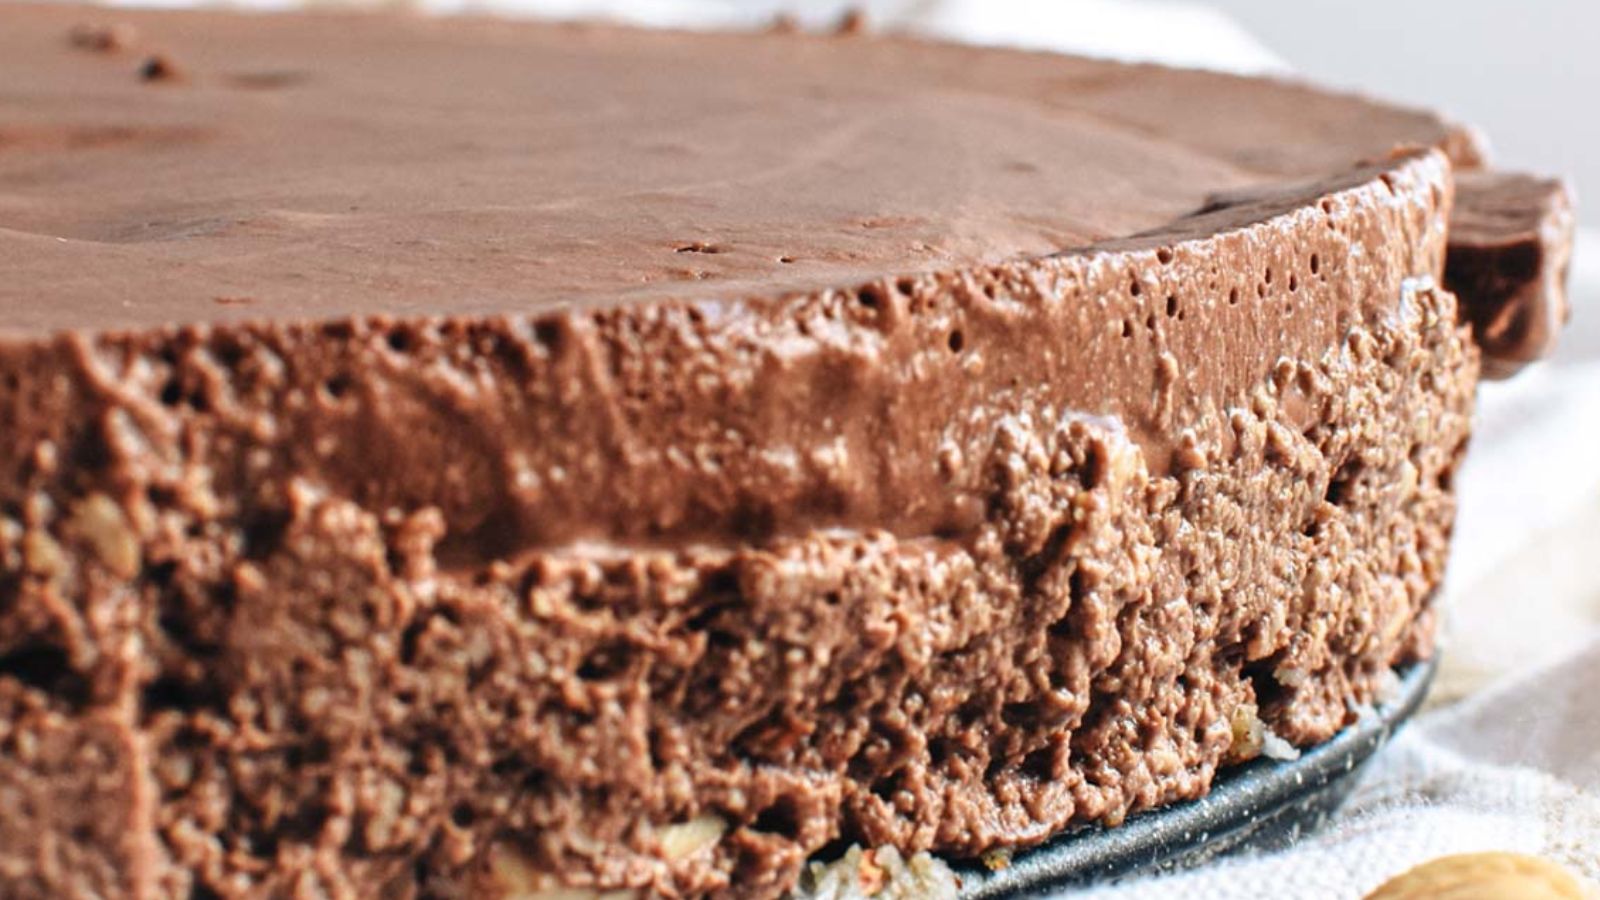 A close up of a chocolate cake.